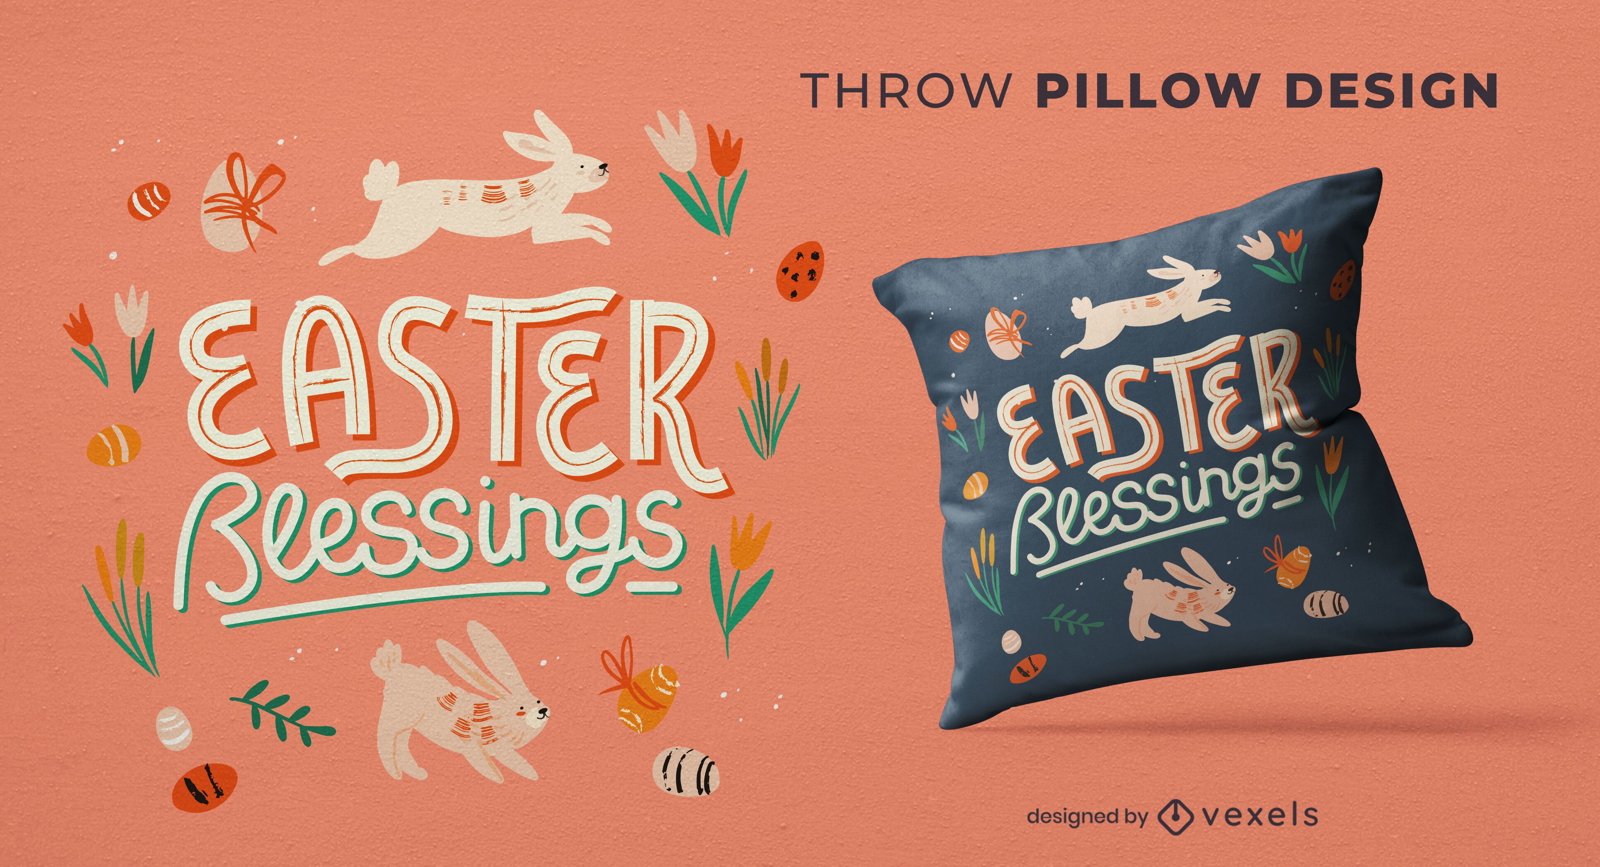 Diseño de almohada de tiro de bendiciones de Pascua